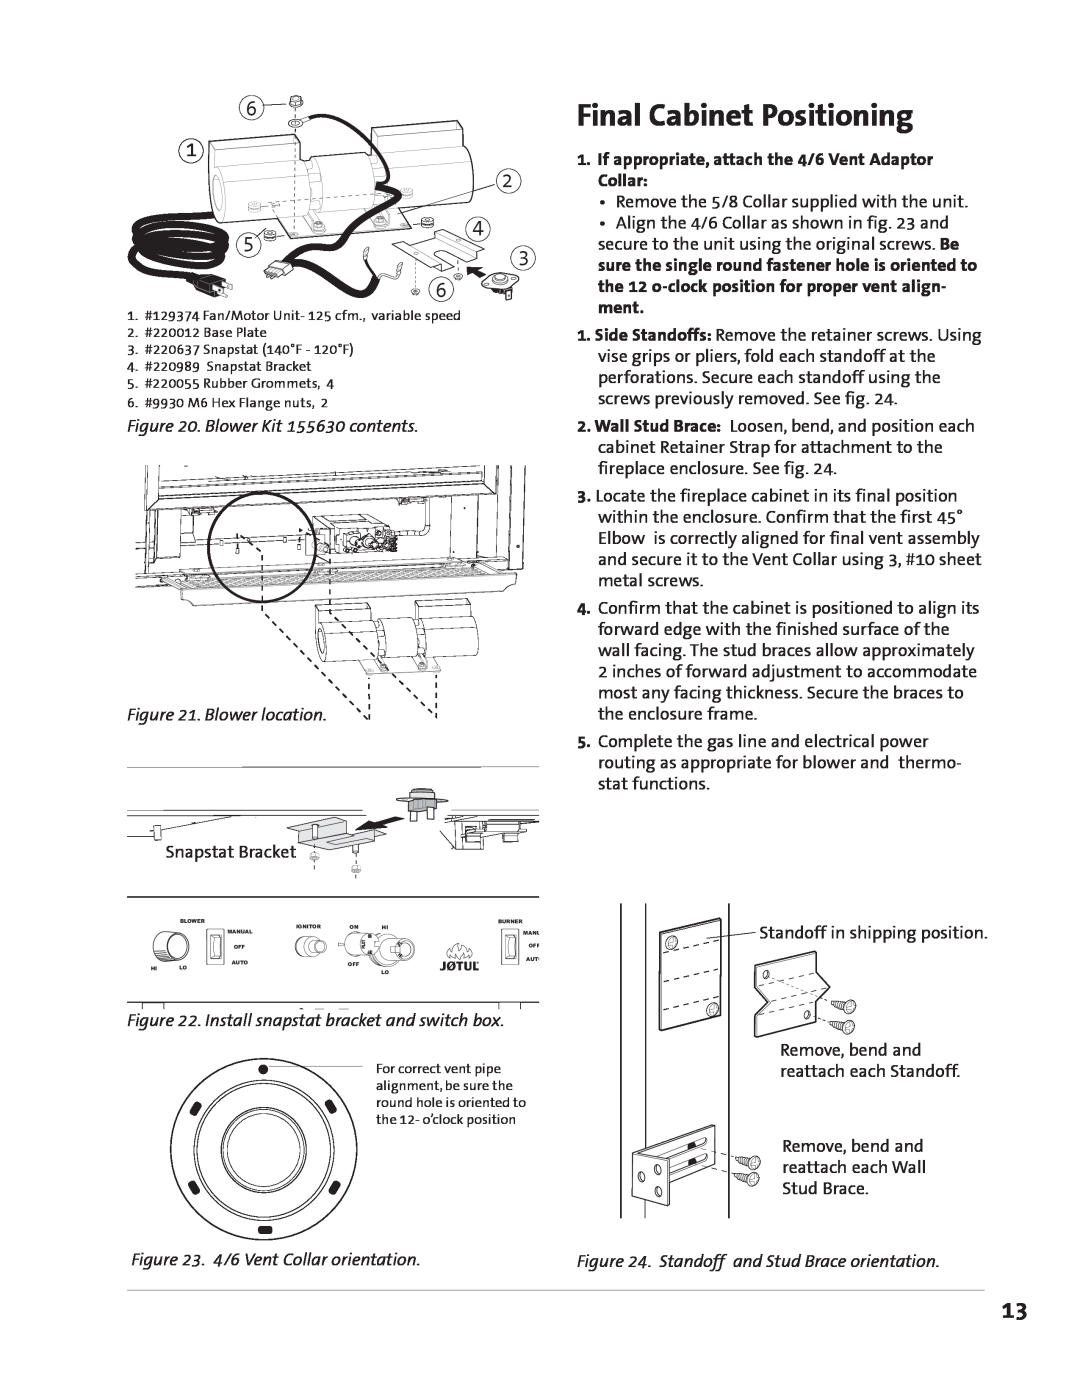 Jotul GZ 550 DV II Final Cabinet Positioning, Blower Kit 155630 contents, Blower location, 4/6 Vent Collar orientation 